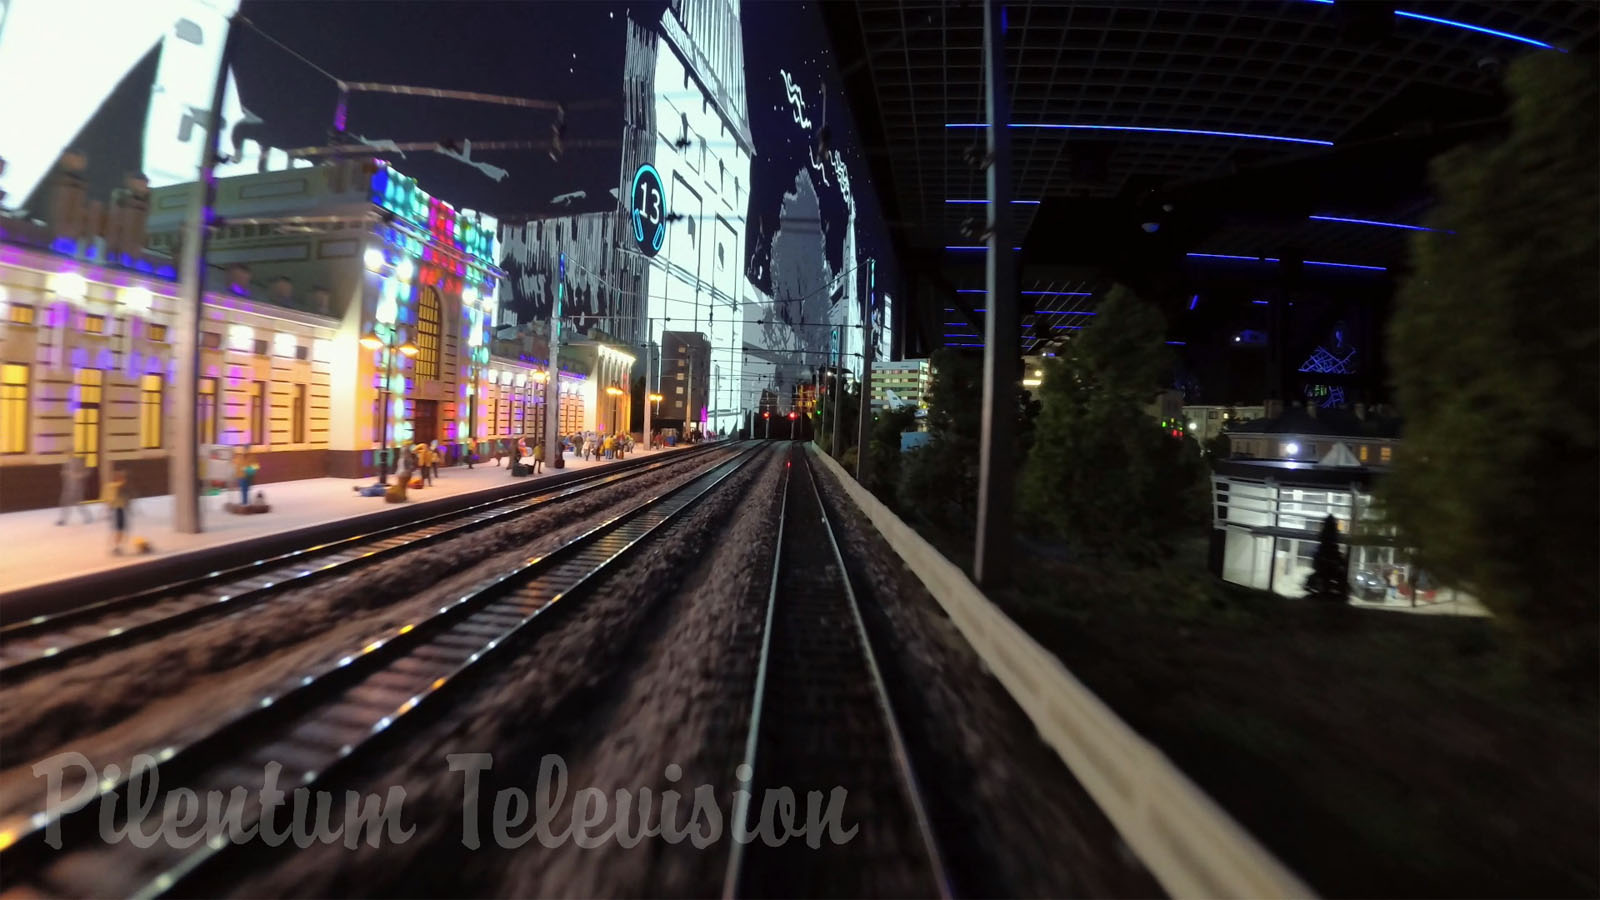 Шоу макет Золотое кольцо - Model trains in Russia - One of the most beautiful HO scale model railway layouts - Макет Золотого кольца России